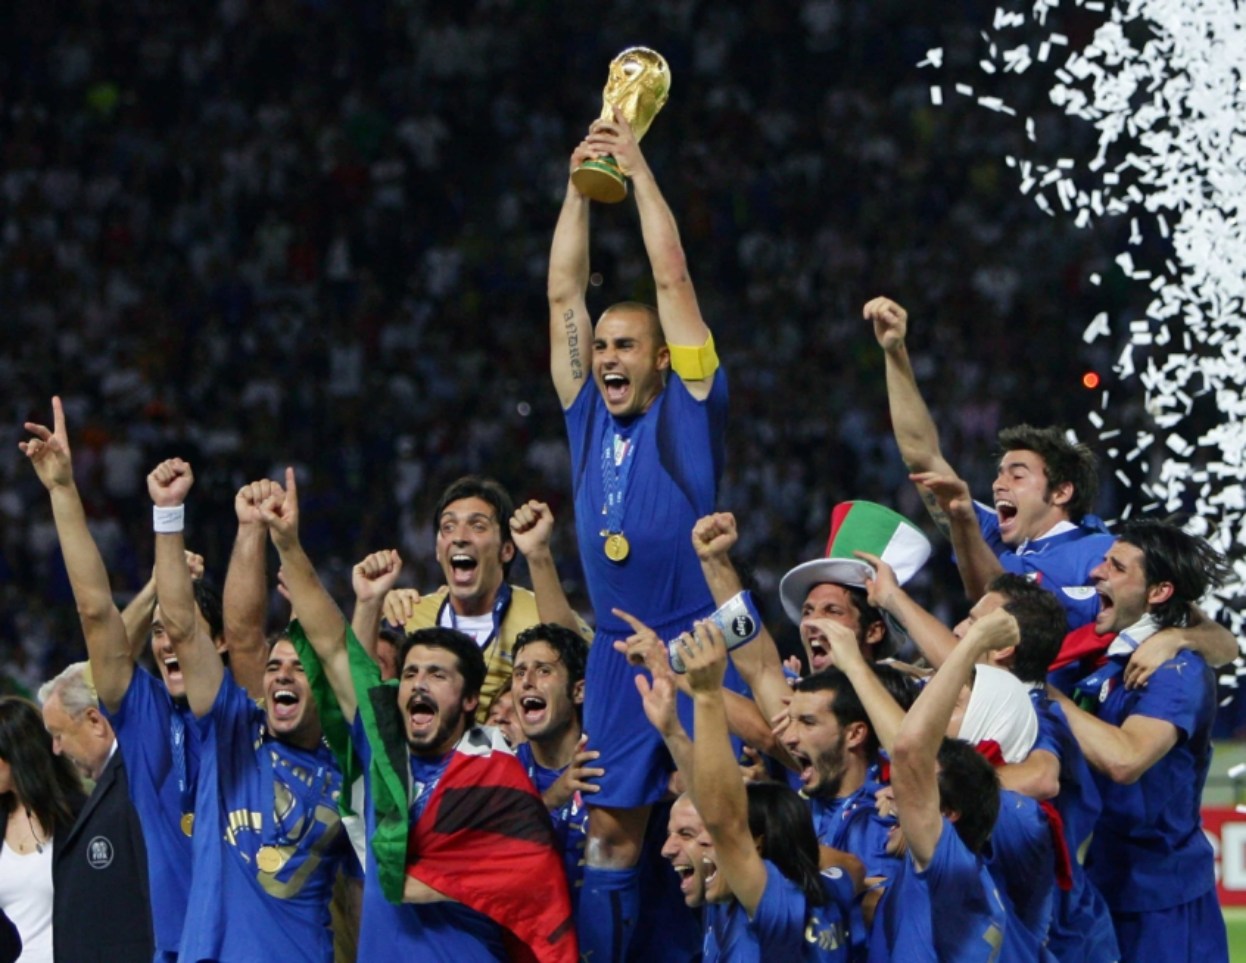 Italy 2006 Champions